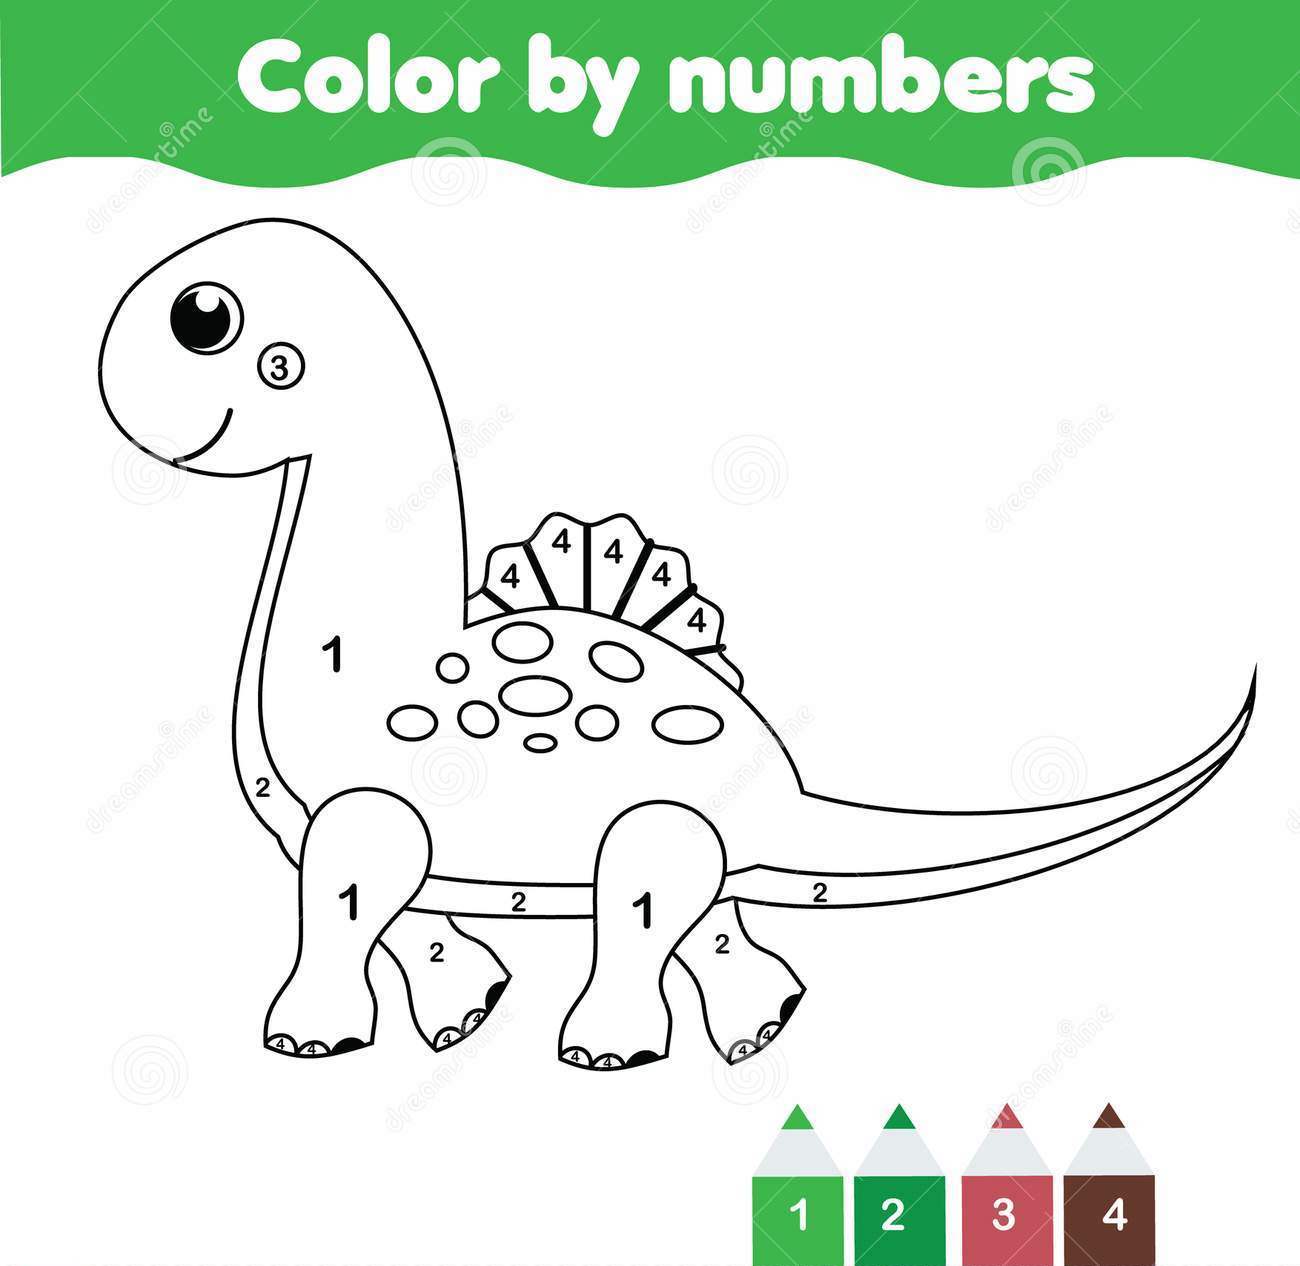 children-educational-game-coloring-page-cute-dinosaur-color-numbers-printable-activity-worksheet-toddlers-pre-102858229.jpg